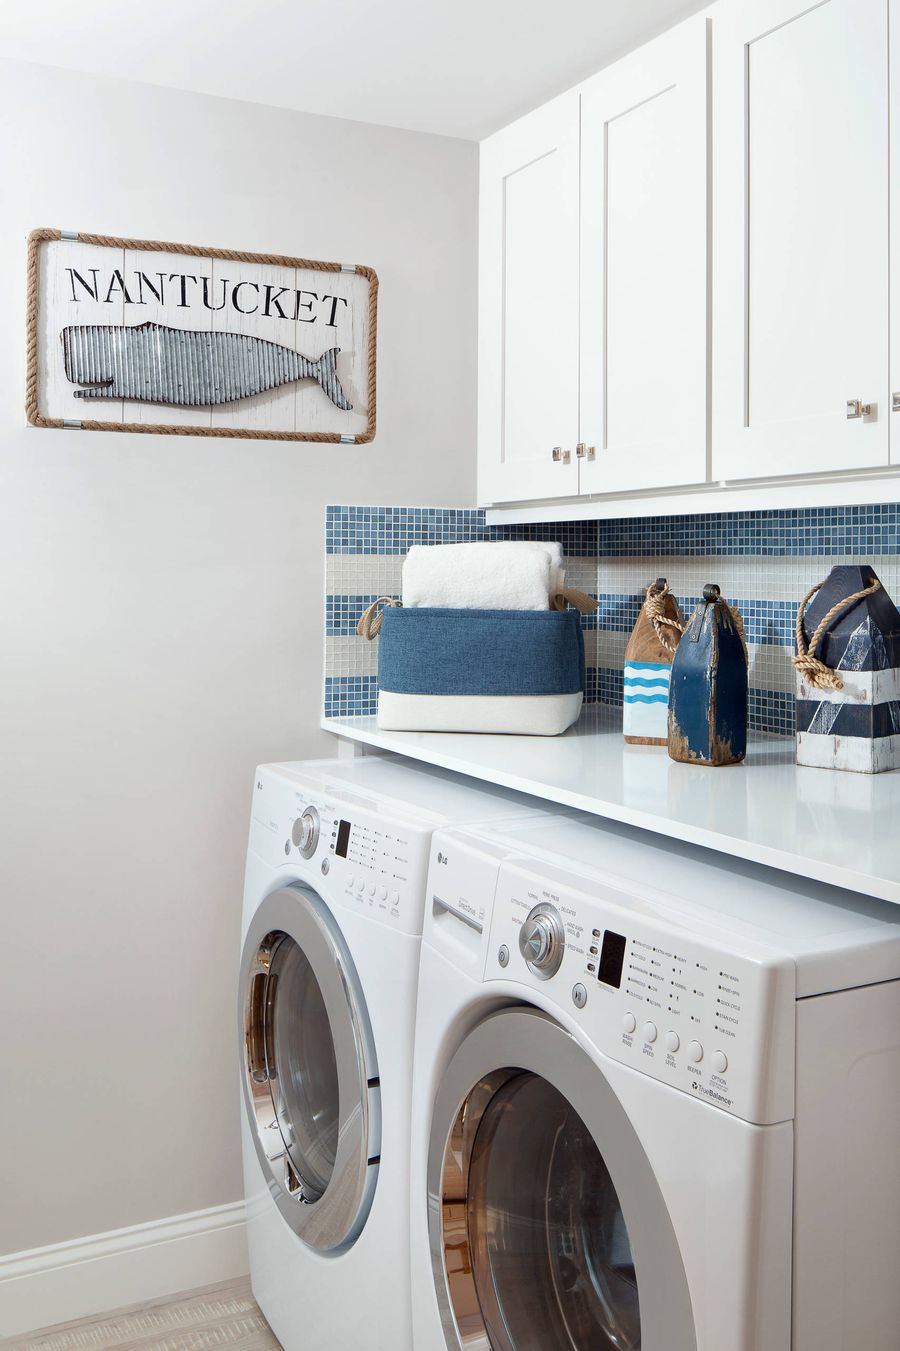 Striped Backsplash in Nantucket Laundry Room via Lisa Michael Interiors